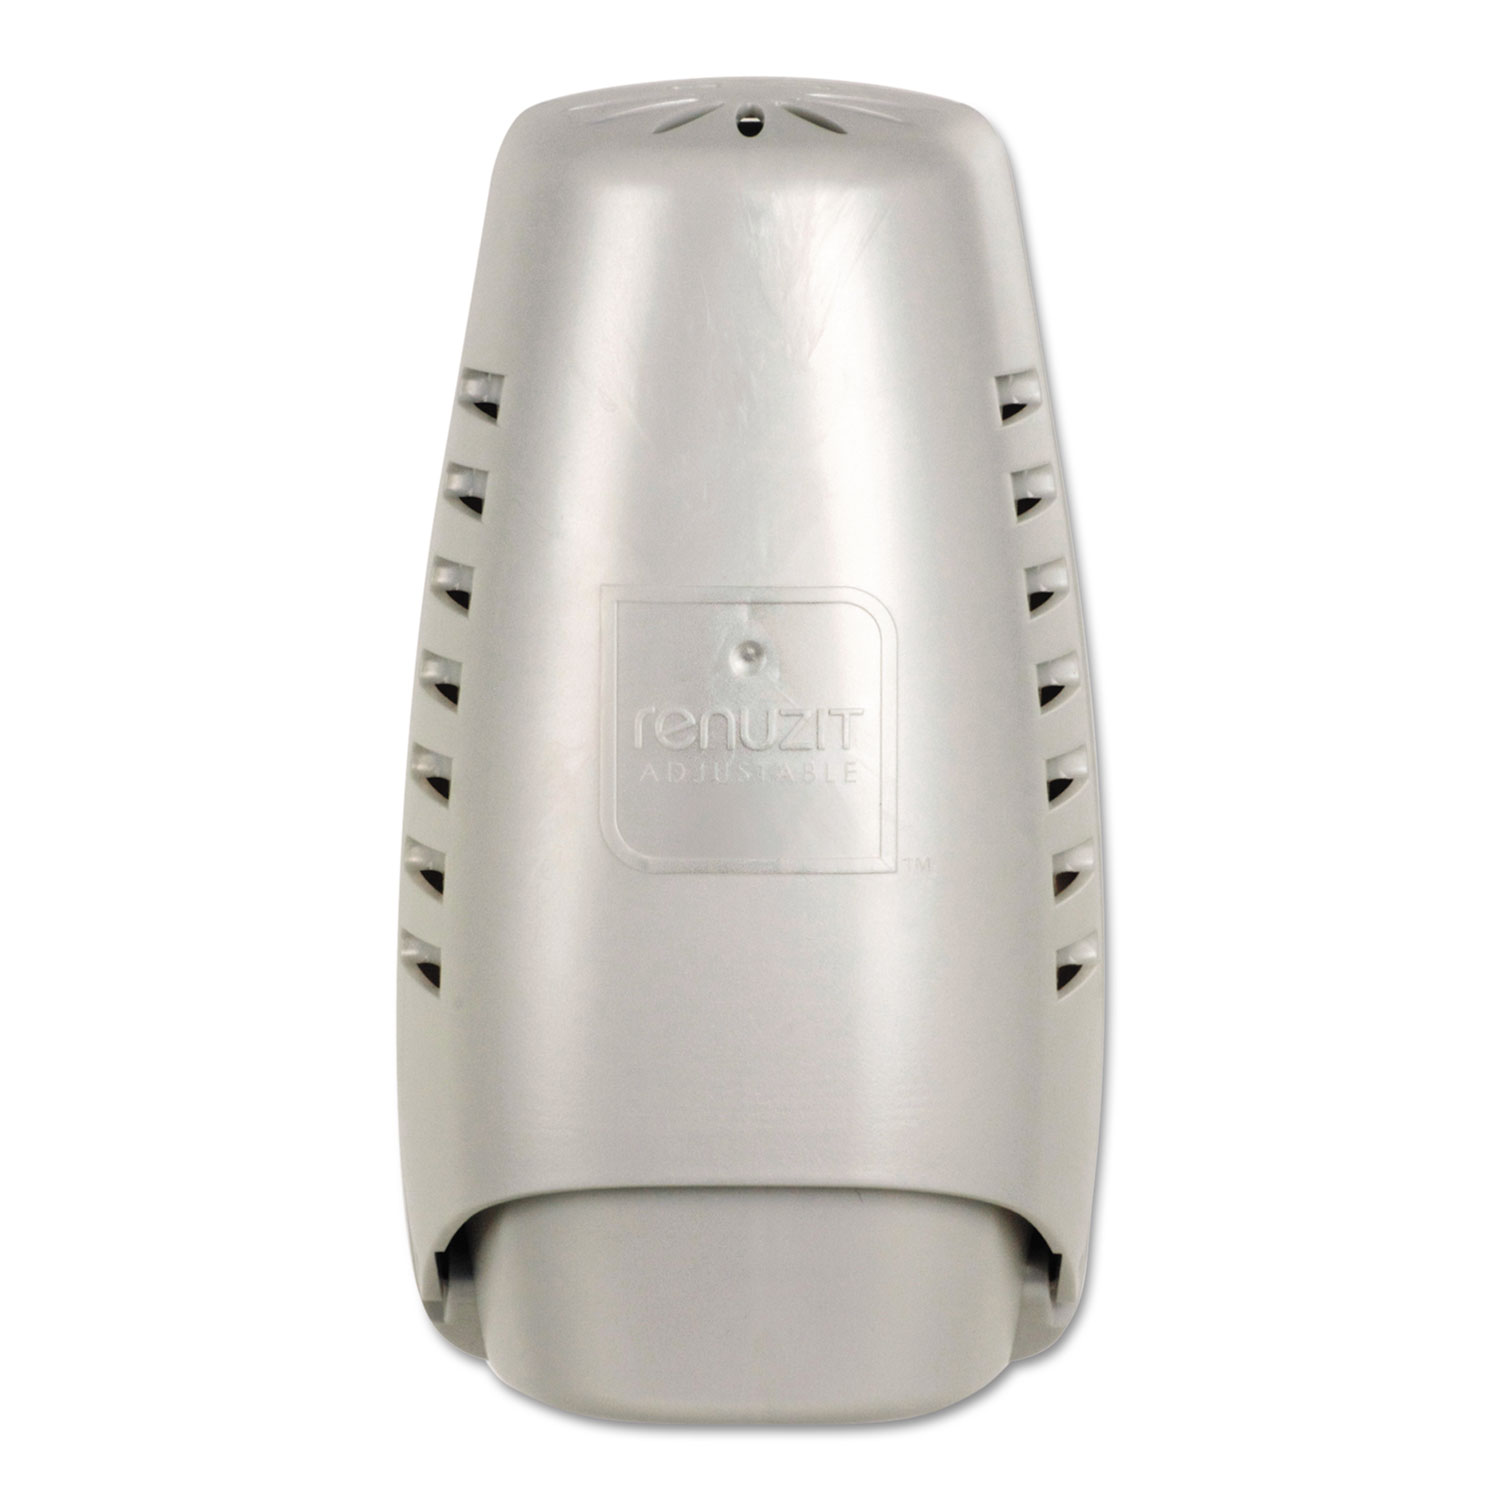 Renuzit Wall Mount Air Freshener Dispenser, 3-3/4" x 3-1/4" x 7-1/4", Silver, 6 Per Carton - image 2 of 3